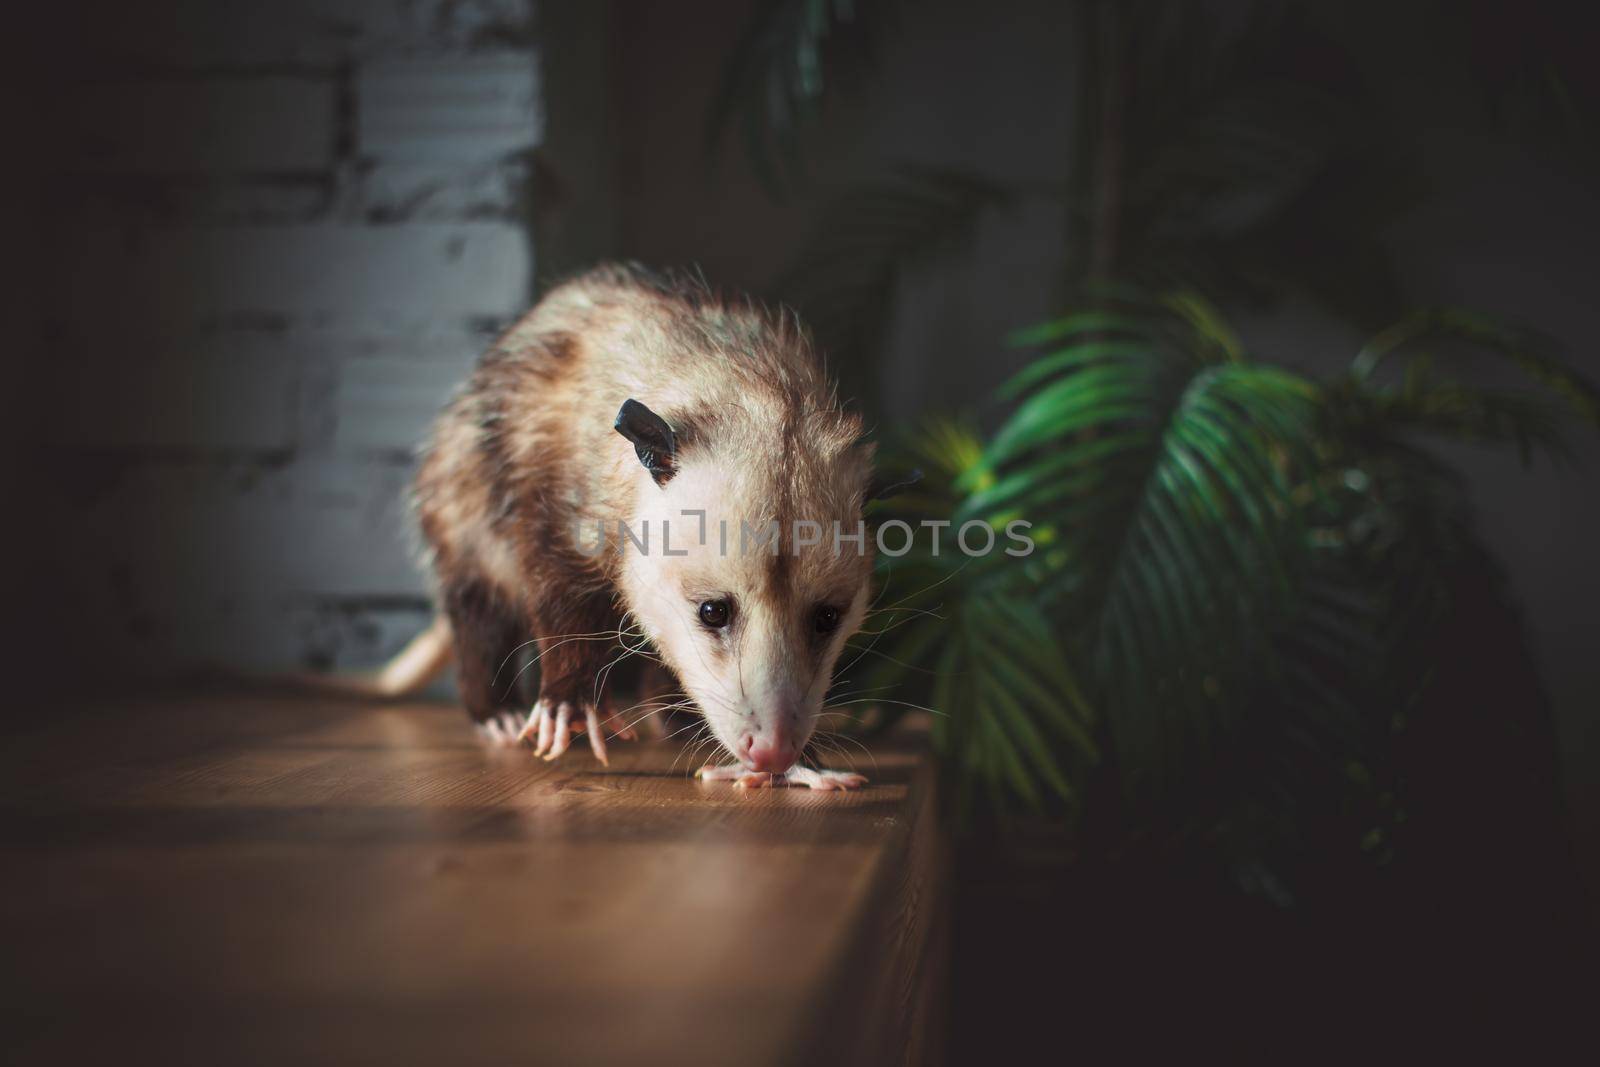 The Virginia or North American opossum, Didelphis virginiana, on window